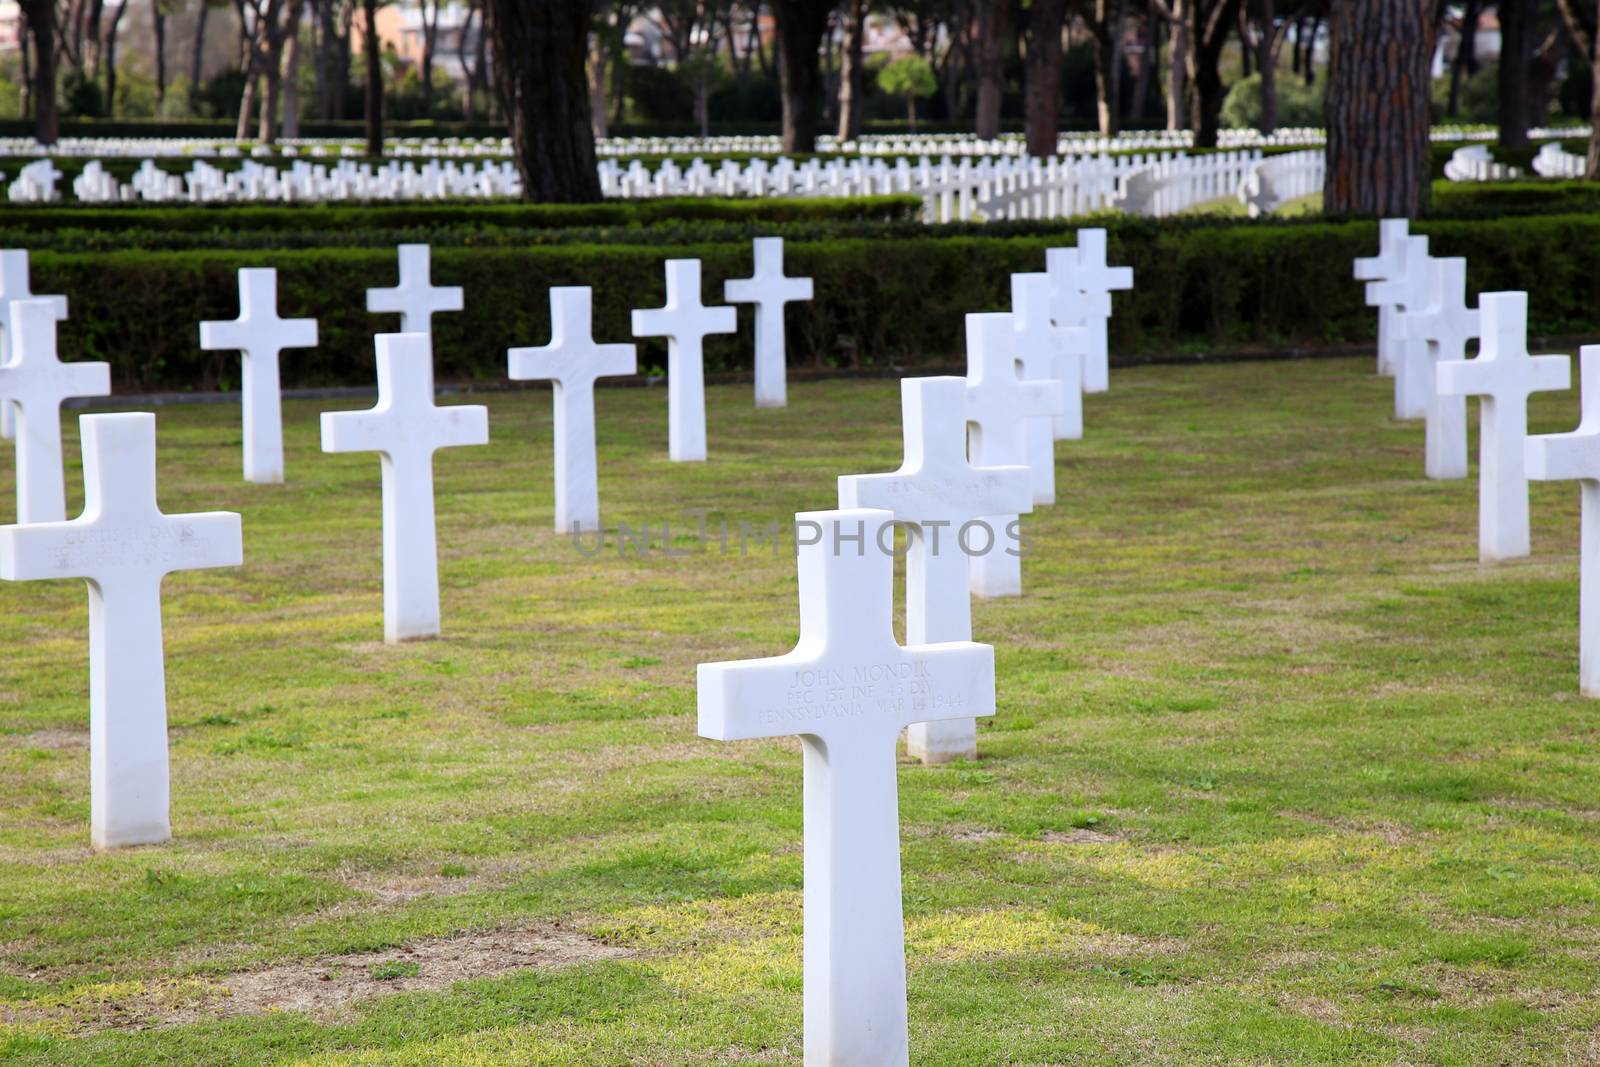 NETTUNO - April 06: Tombs, American war cemetery of the American Military Cemetery of Nettuno in Italy, April 06, 2015 in Nettuno, Italy.